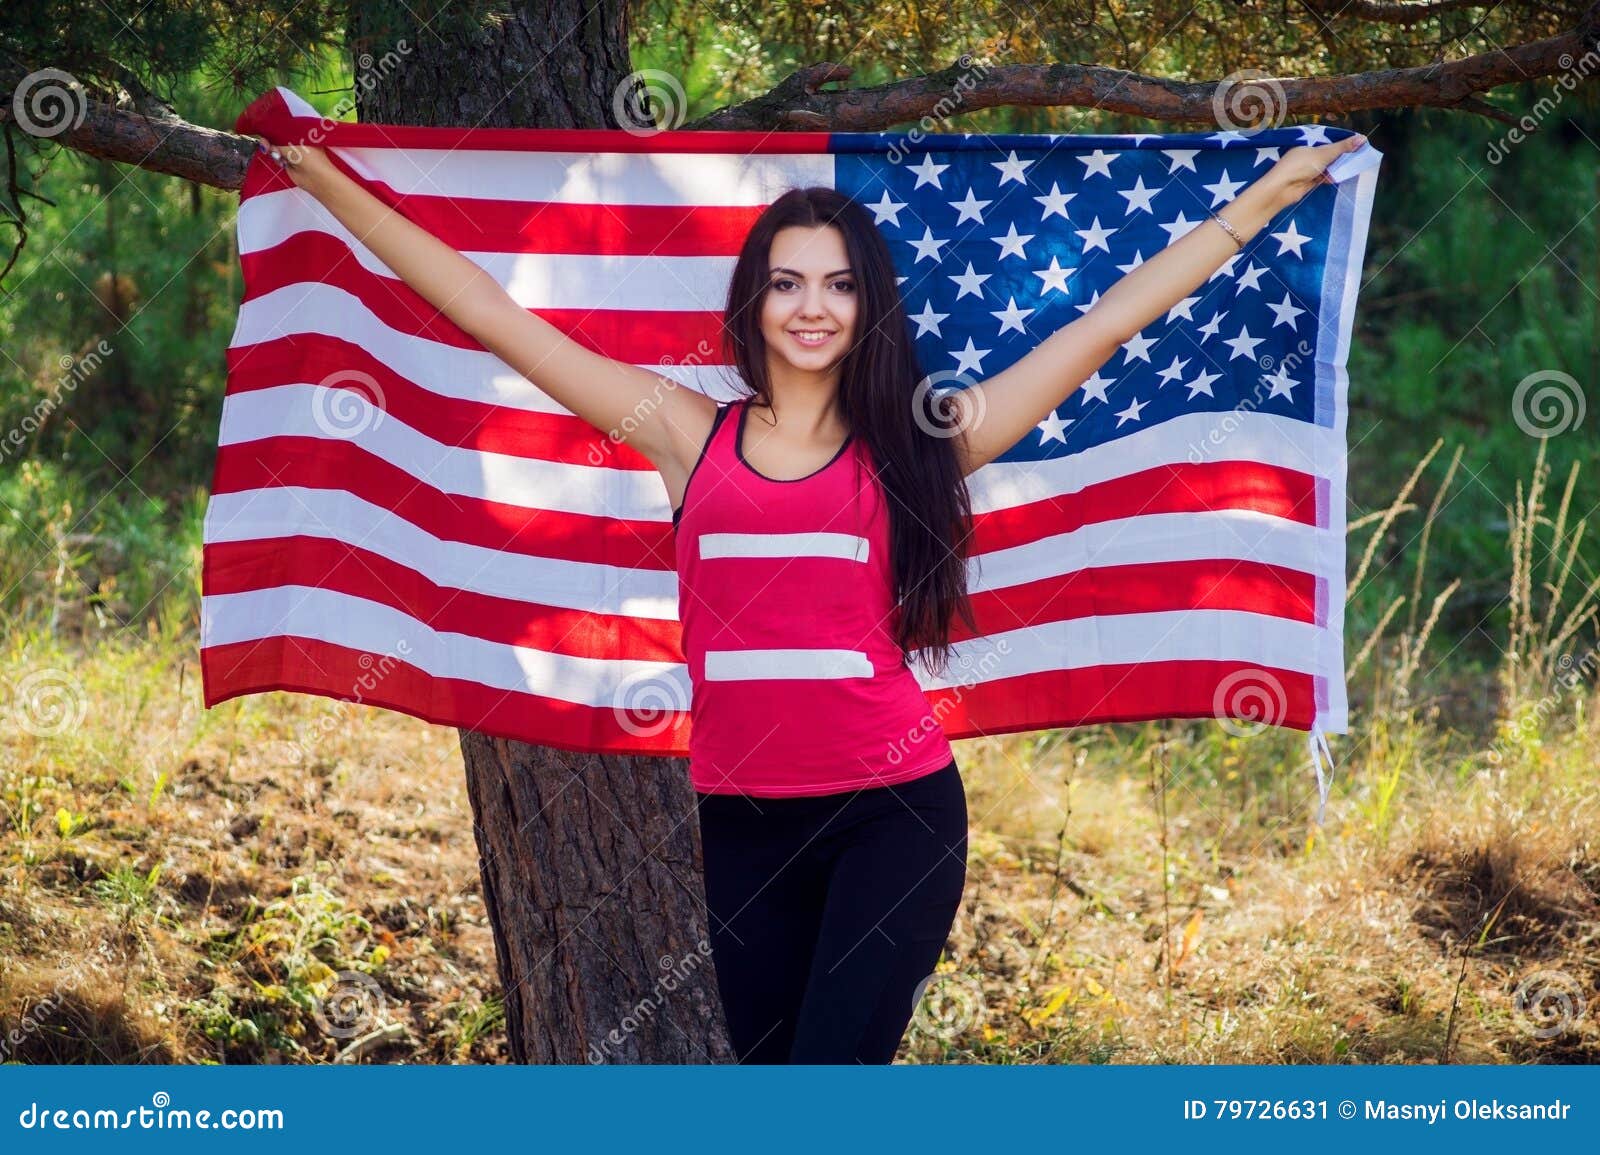 Русский девушки в америке. США девушки. Фотосессия с флагом. Девушка с американским флагом. Патриотизм США.